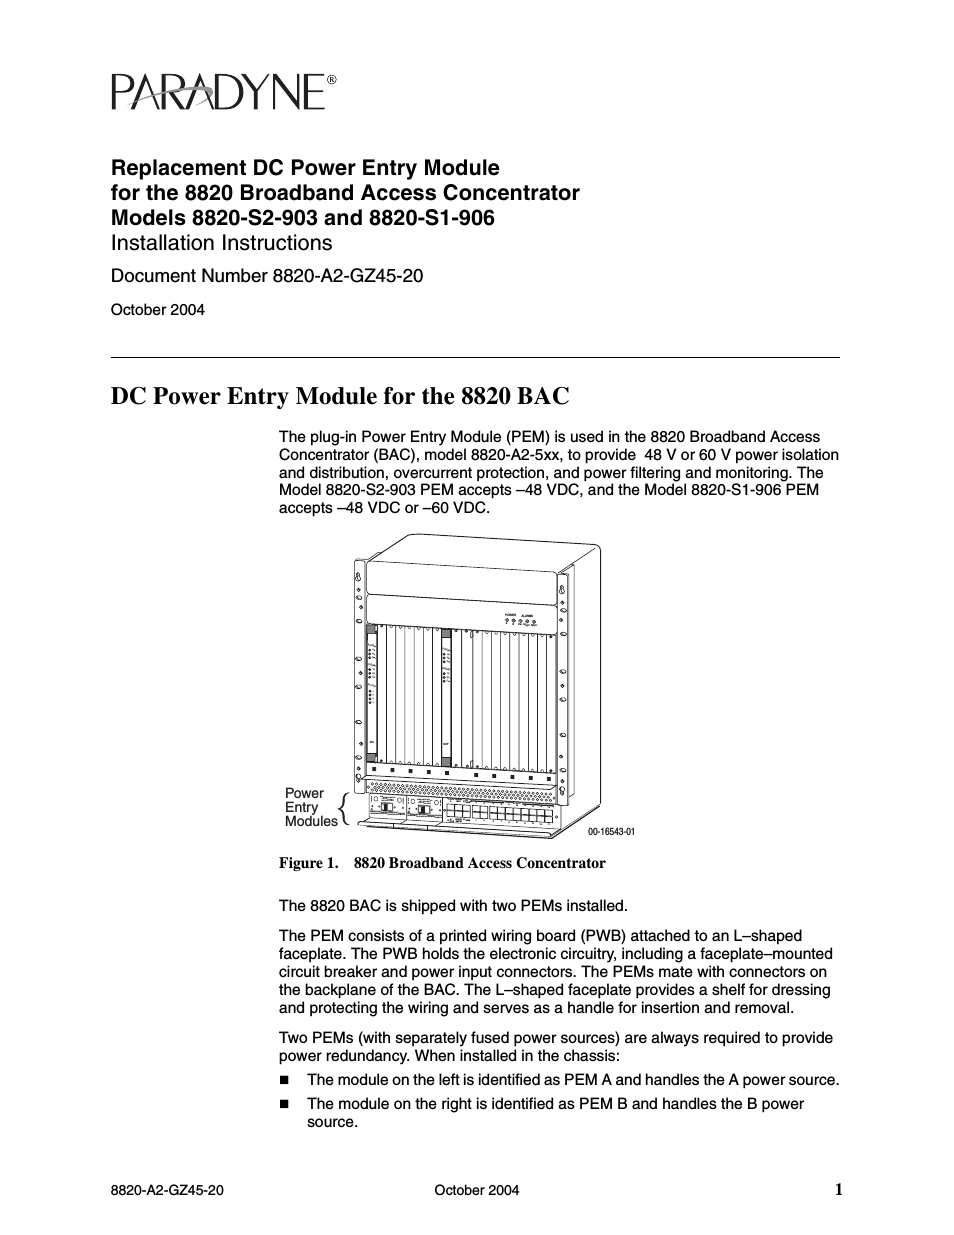 DC Power Entry Module 8820-S1-906